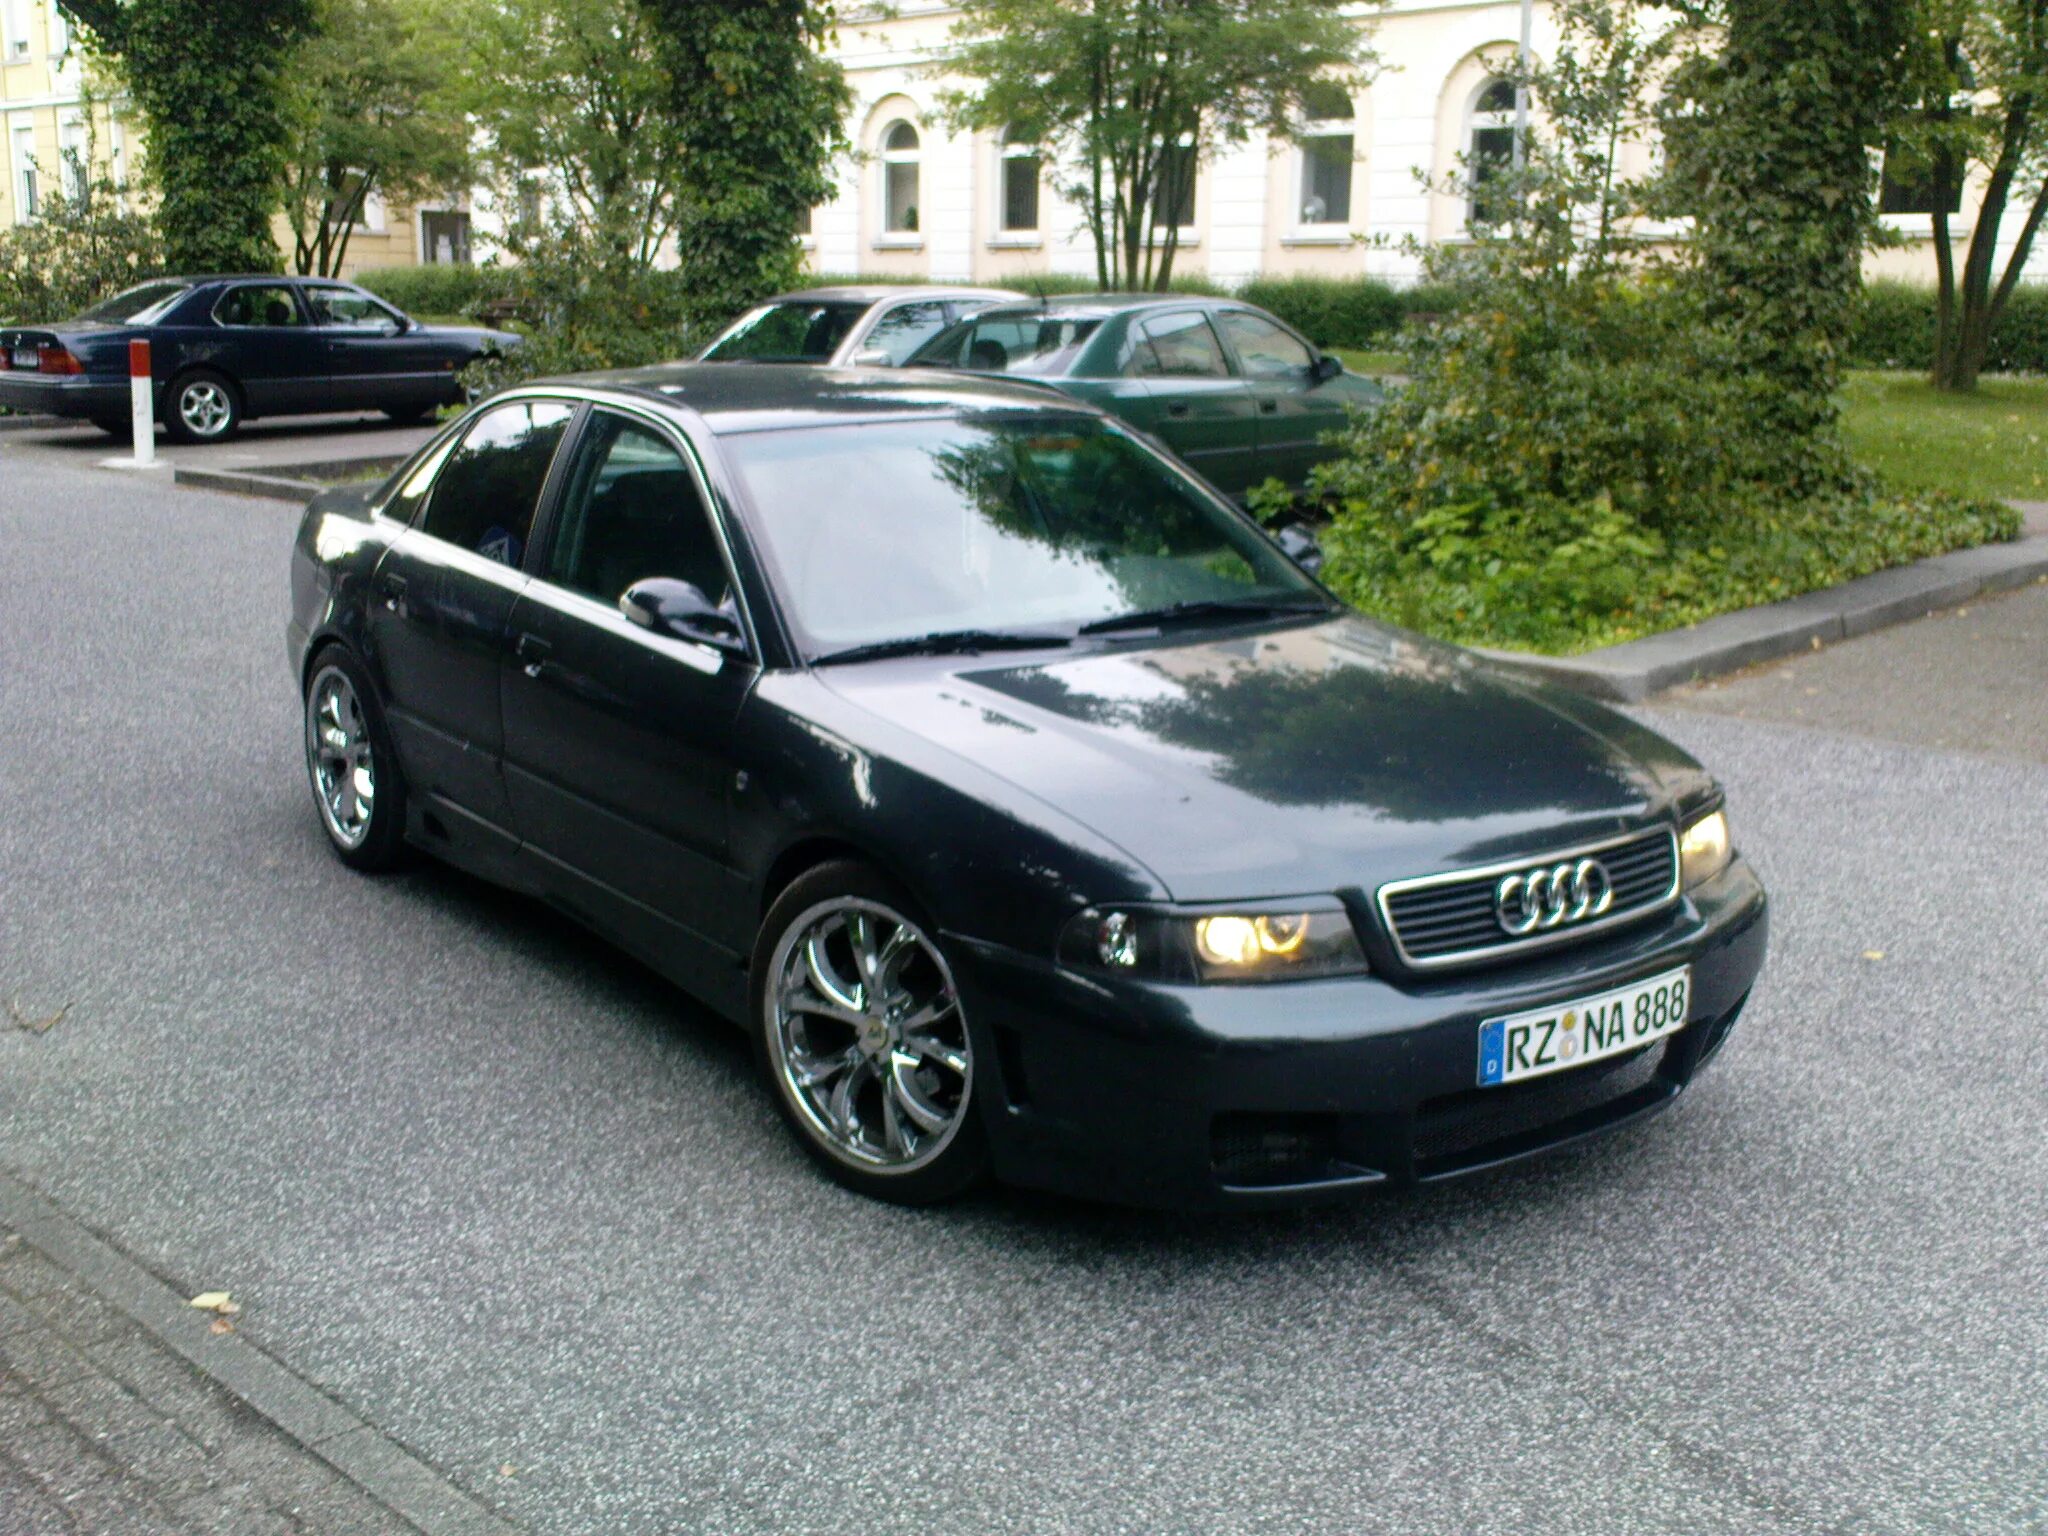 Купить а4 б у. Audi a4 b5 2000. Audi a4 b5 1995. Audi a4 b5 1996. Audi a4 b5 1999.